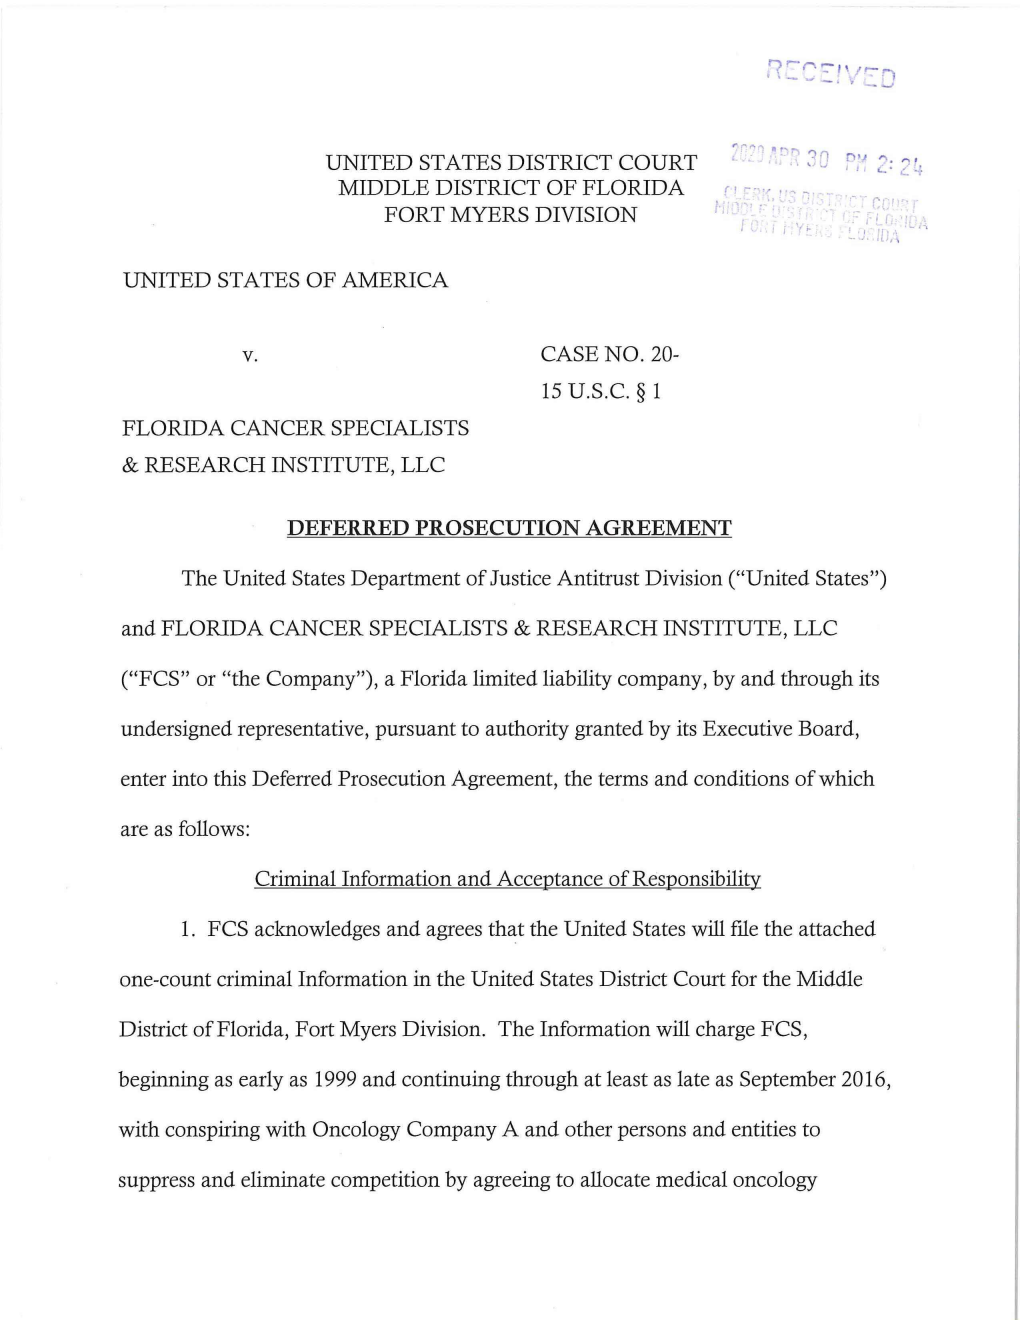 Download FCS Deferred Prosecution Agreement